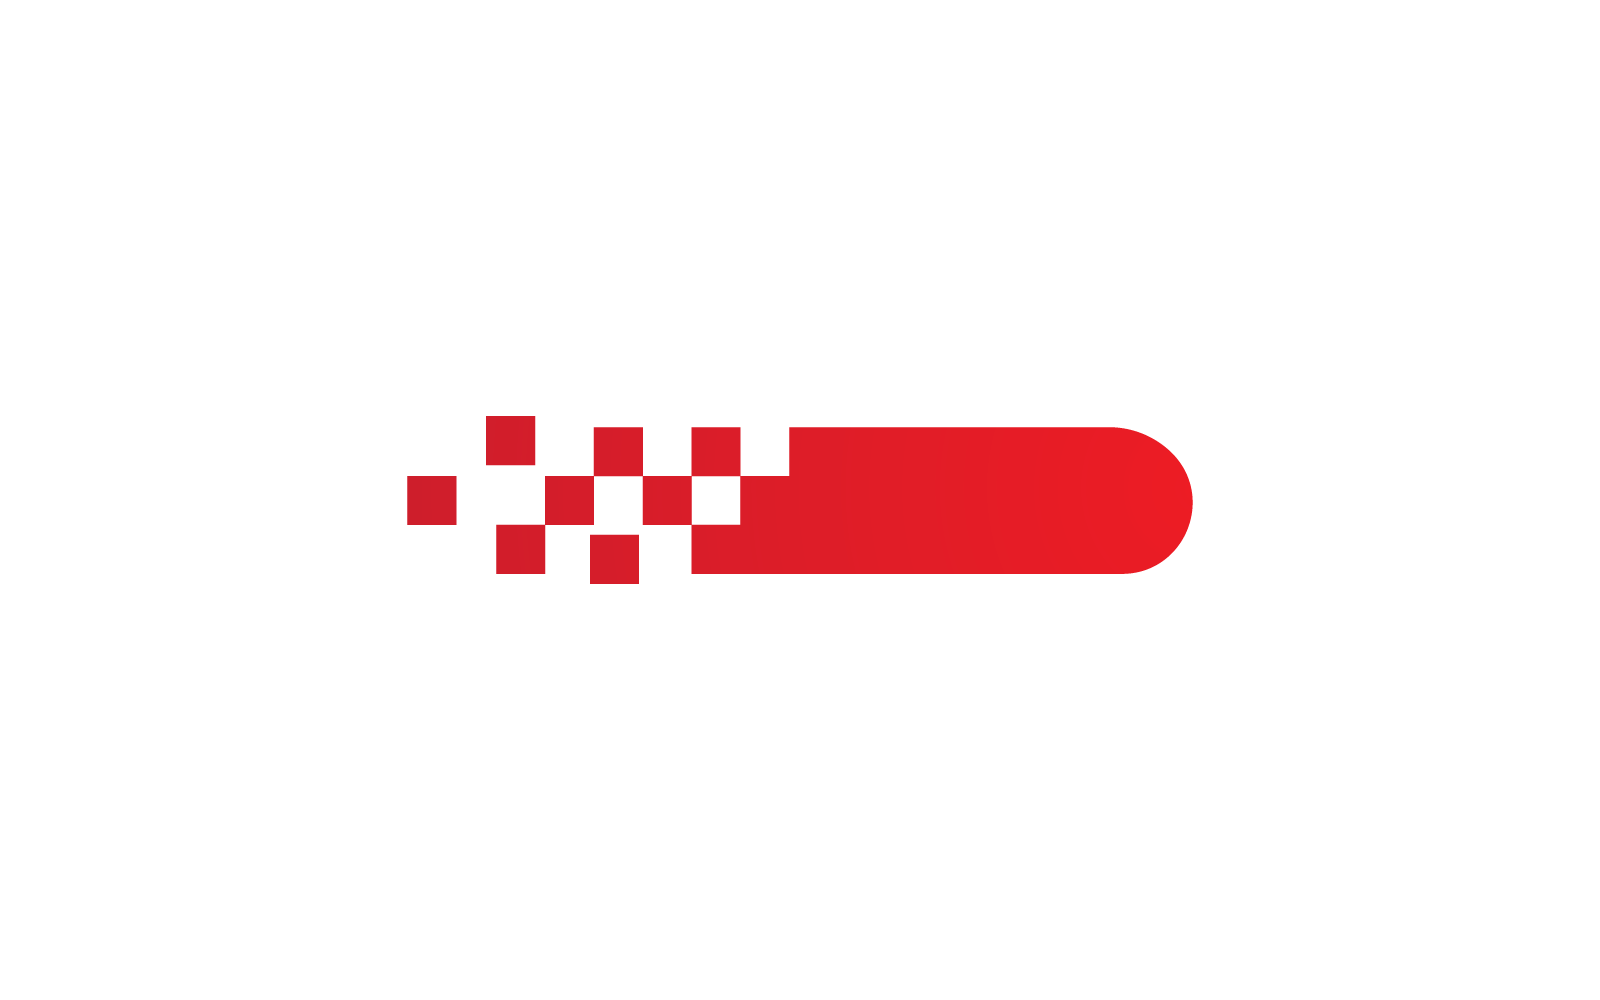 Шаблон векторной иконки логотипа гонки